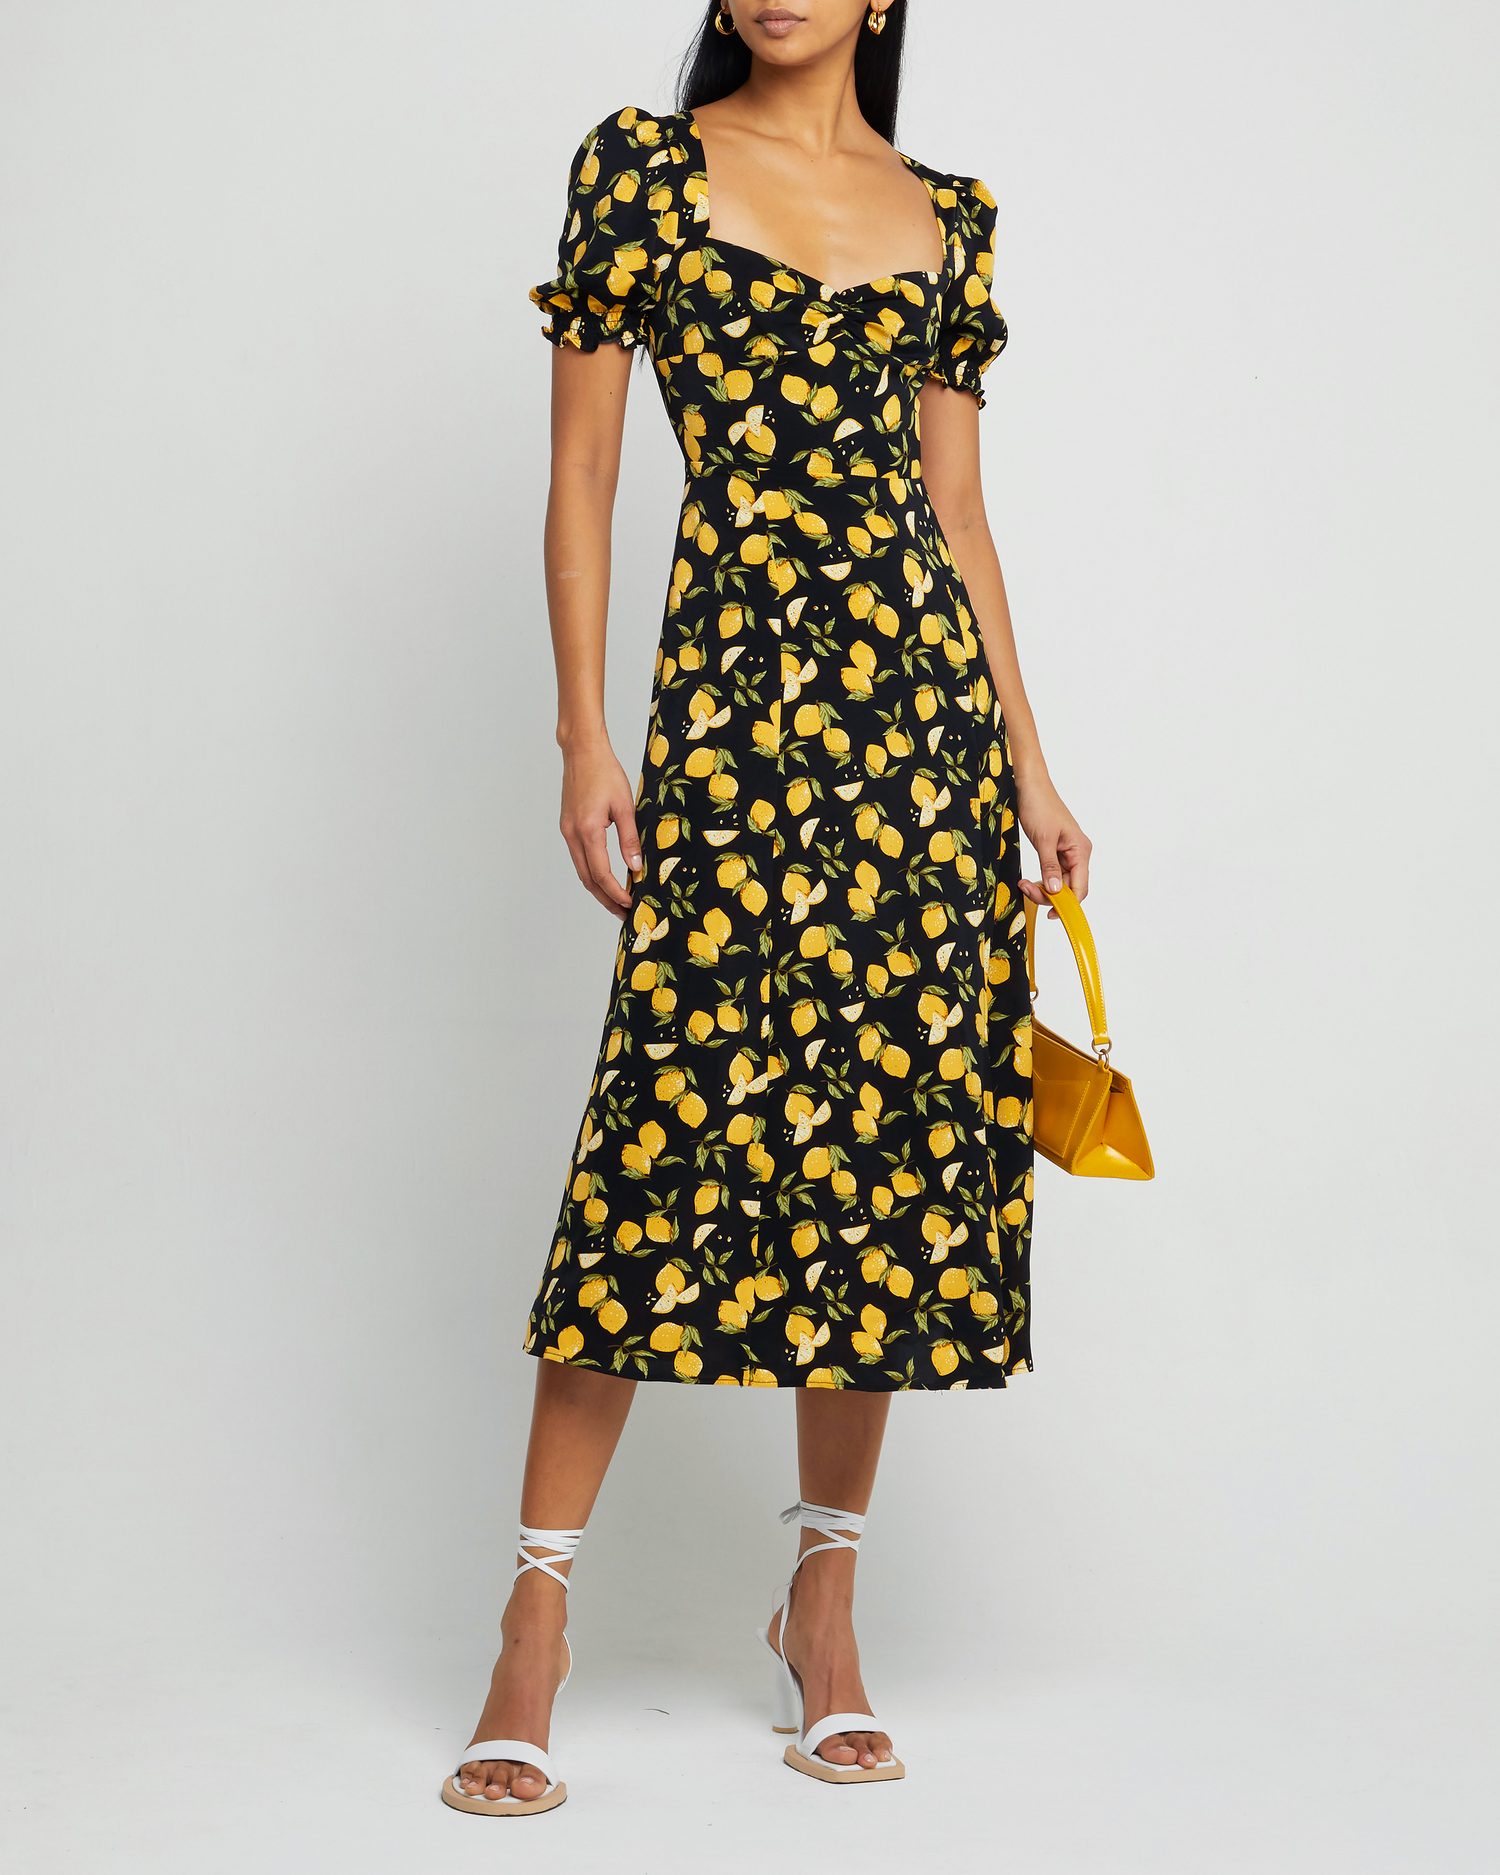 Fourth image of Melanie Dress, a black midi dress, side skirt slit, yellow lemon print, short sleeves, puff sleeves, cap sleeves, sweetheart neckline